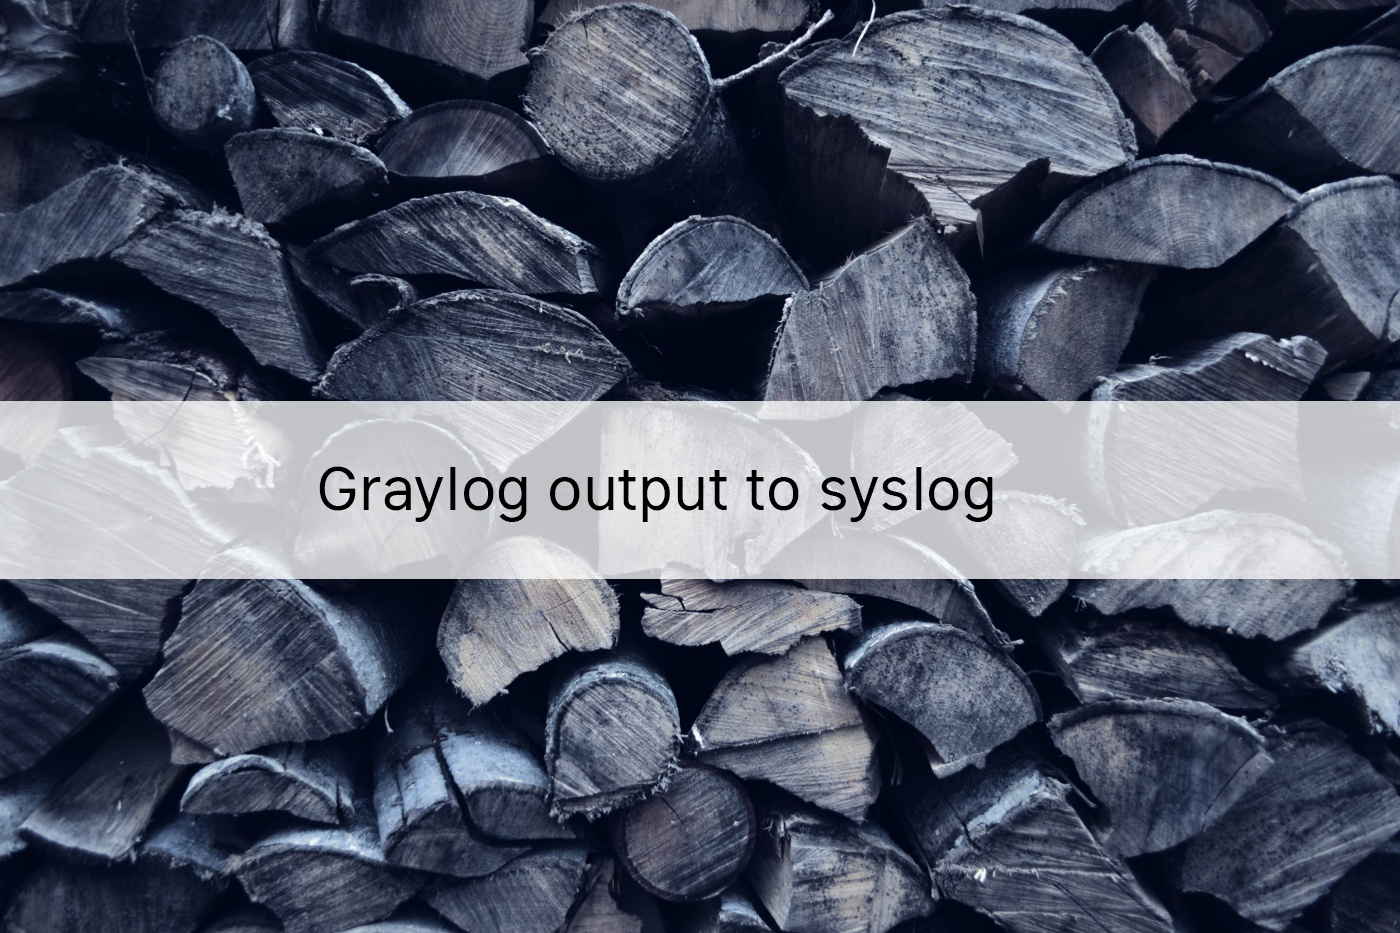 graylog-output-syslog-lucas-minklein-3974.png